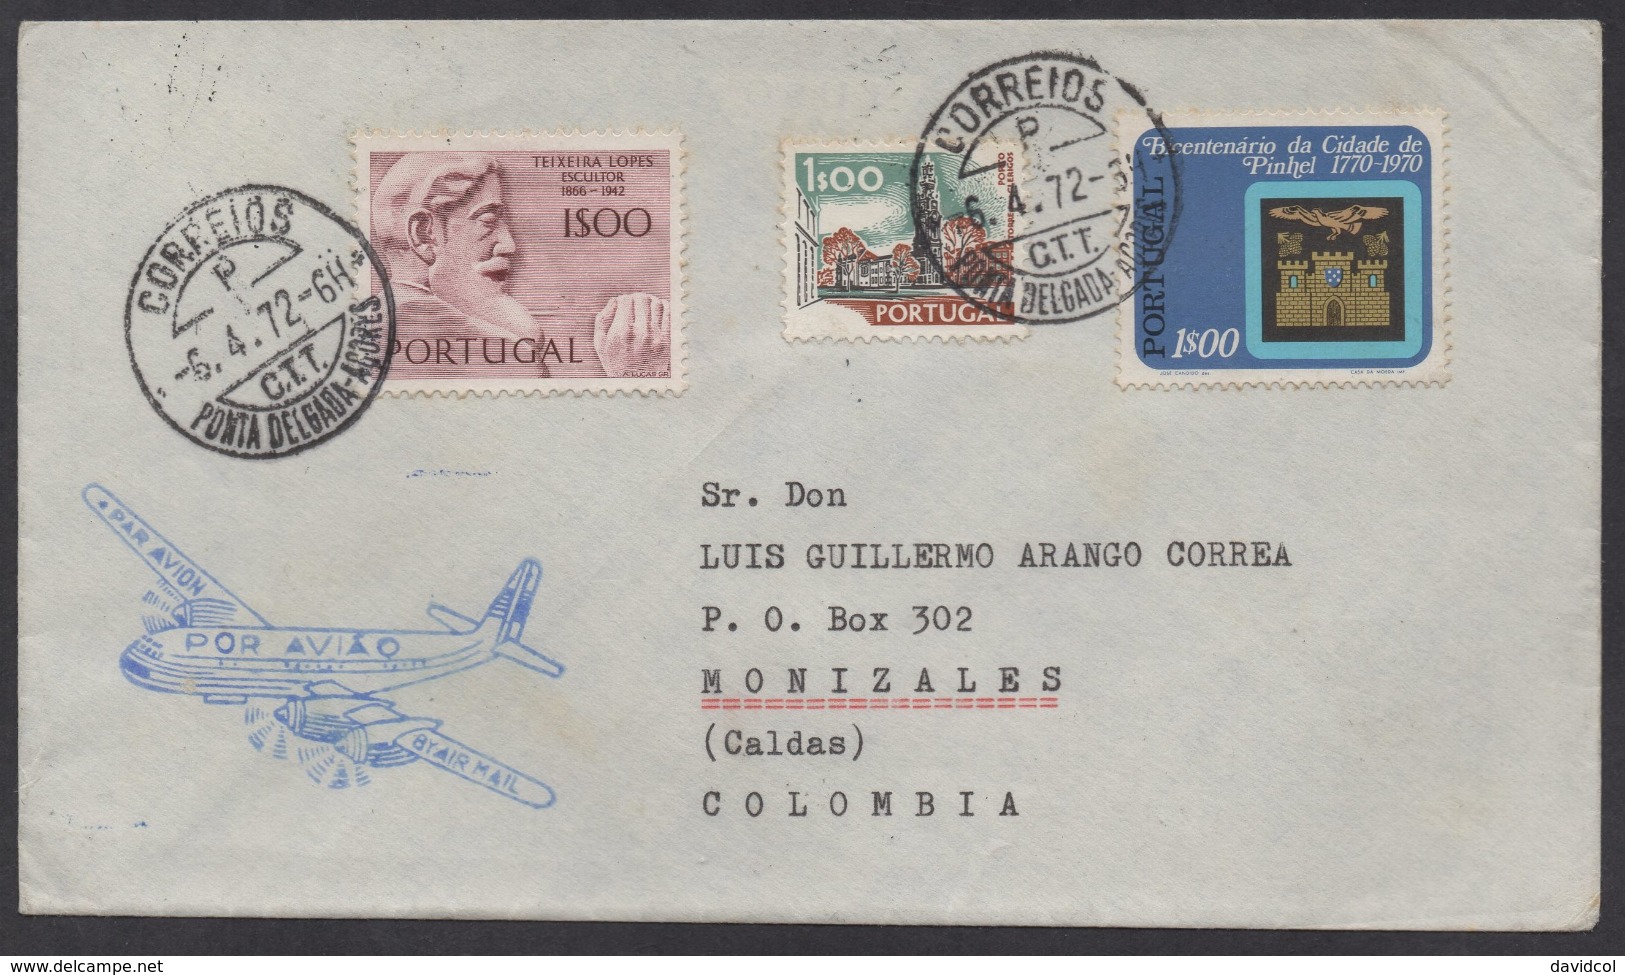 SA184- PORTUGAL-AZORES - 1972 - PONTA DELGADA 6-4-72 TO MANIZALES-CALDAS-COLOMBIA 12-IV-72 - Portuguese Africa